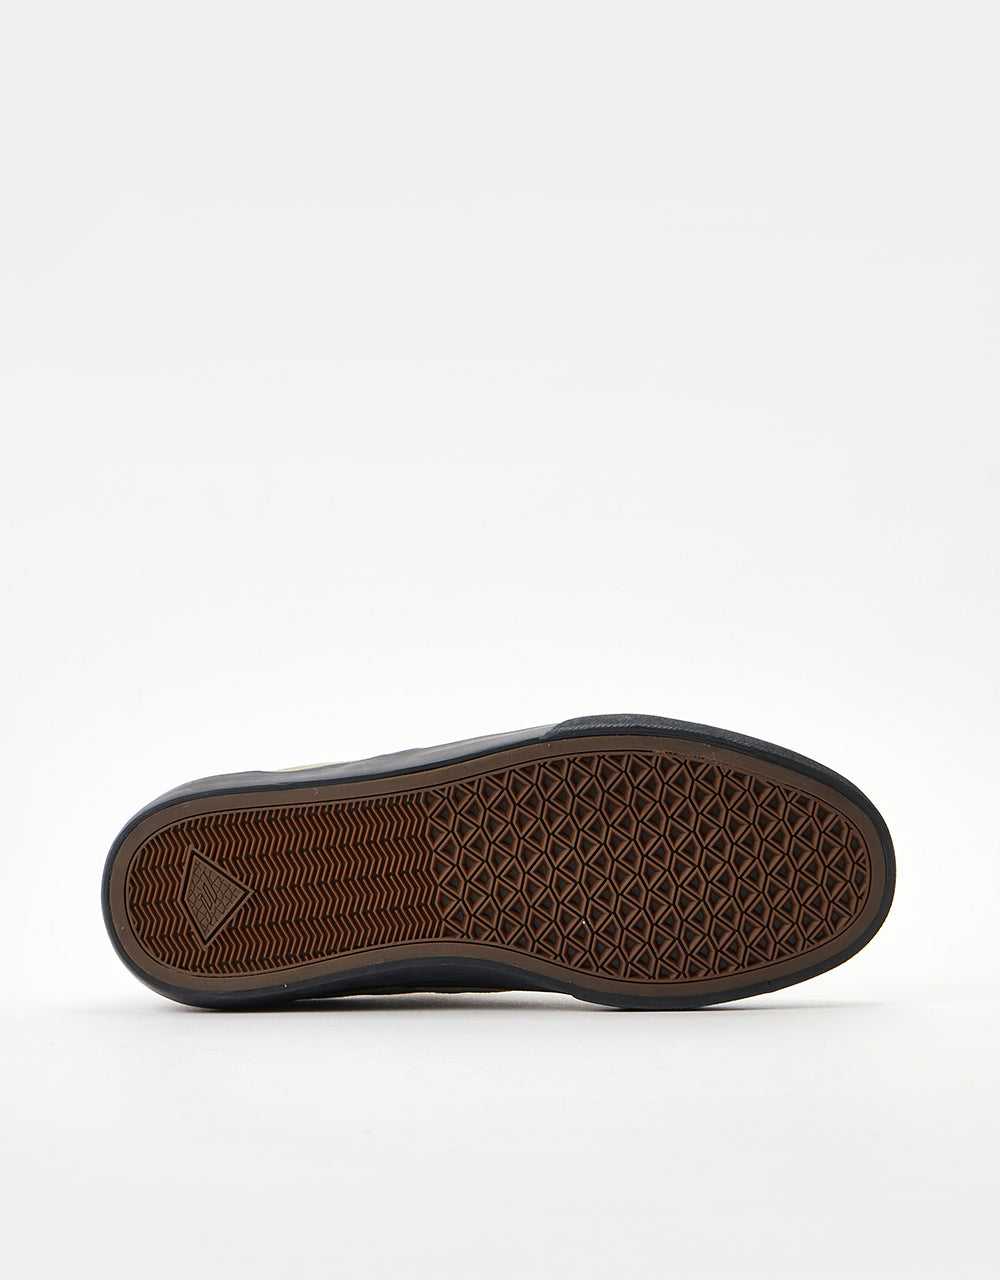 Emerica Provost G6 Skate Shoes - Olive/Black